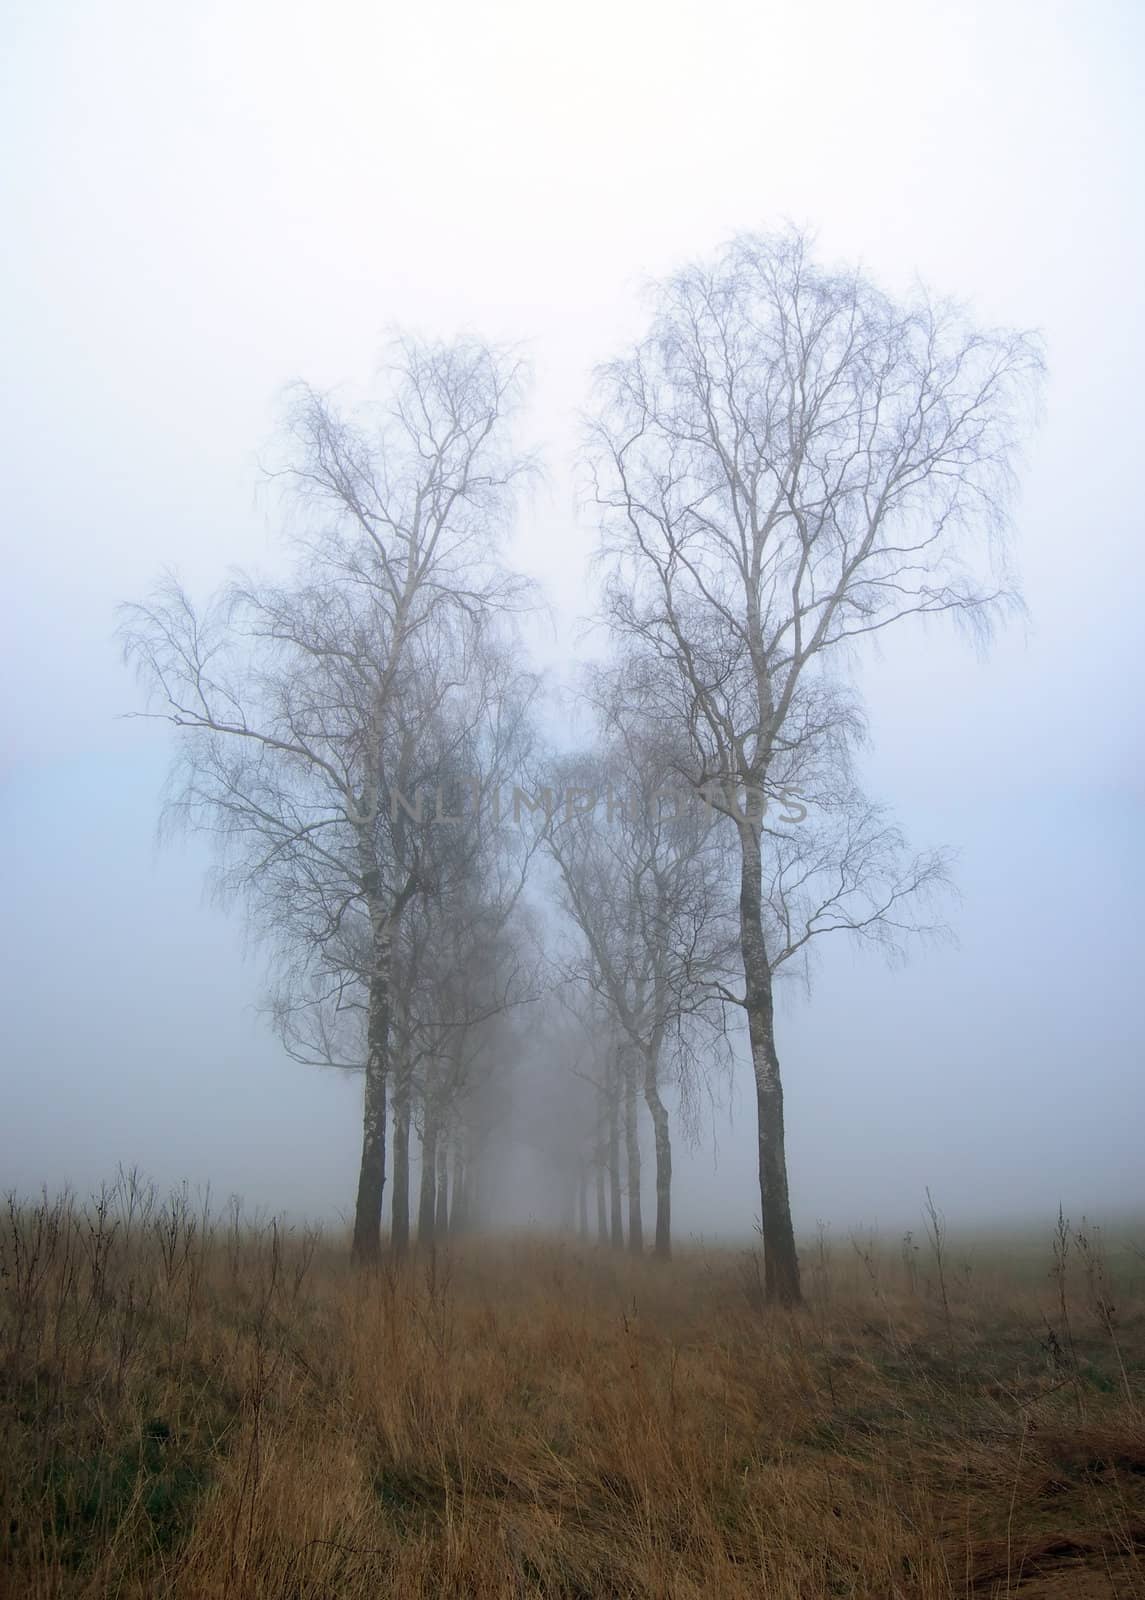 Birches in the mist by drakodav